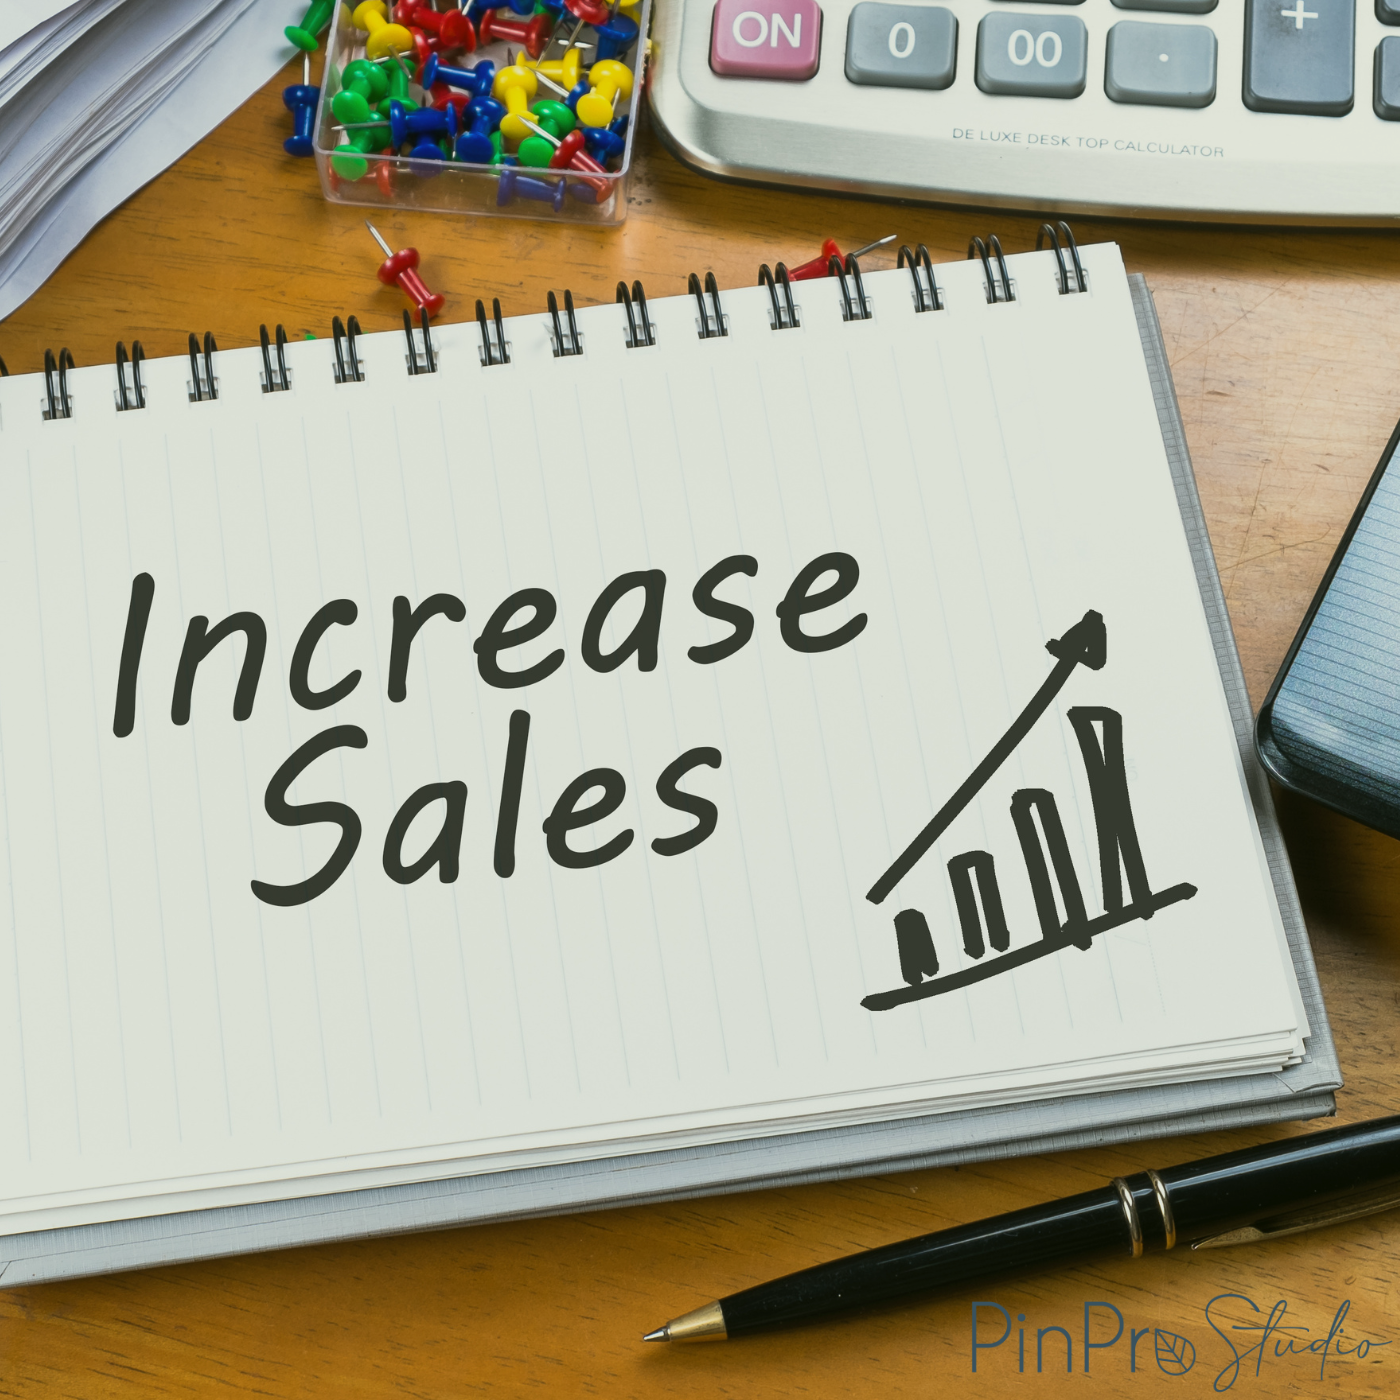 Increase sales